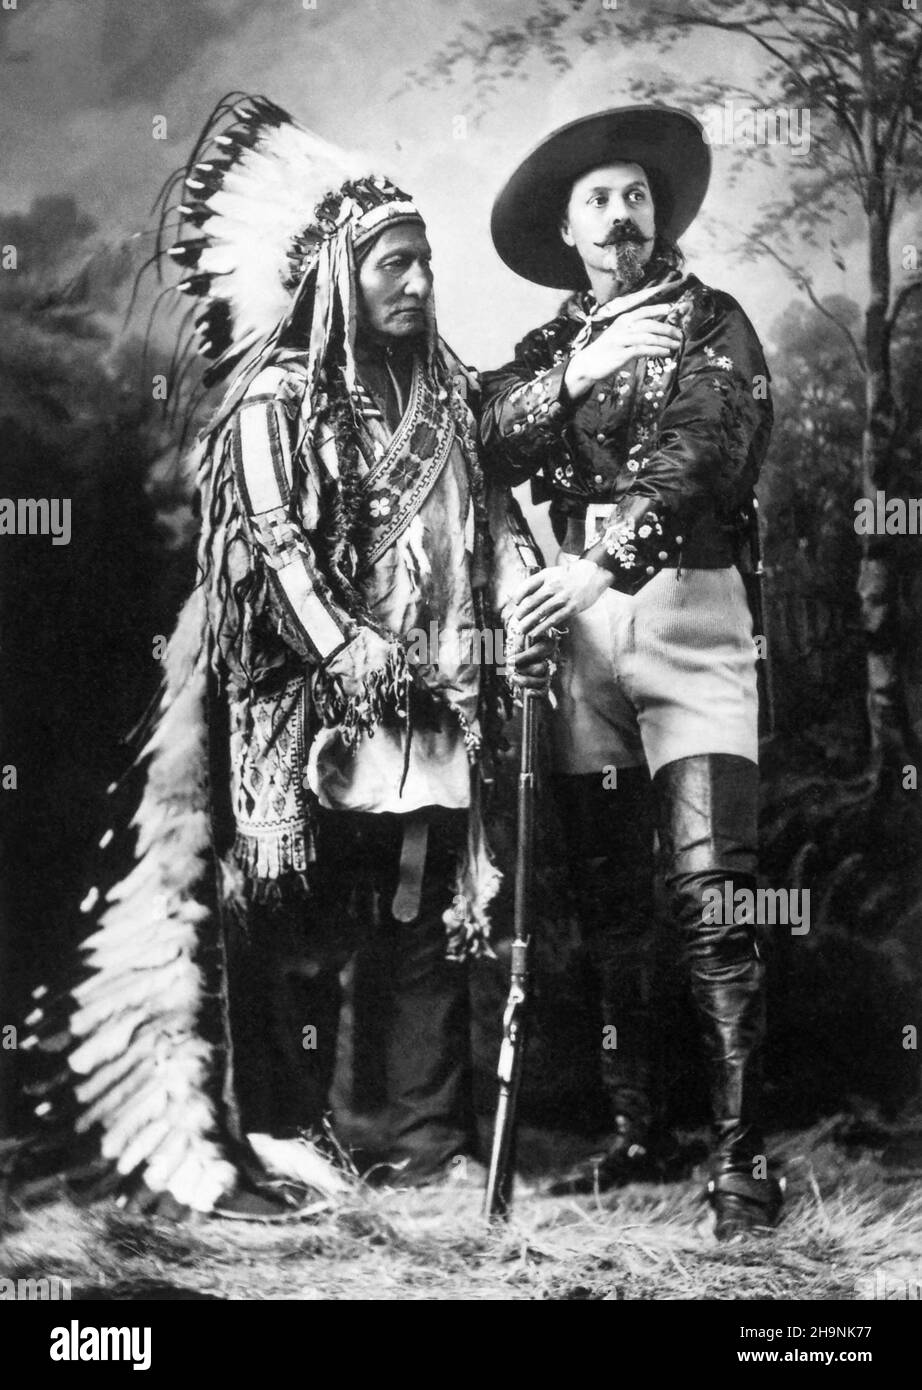 Sitting Bull & 'Buffalo Bill' Cody, Wild West Show, 1895, by A. Kyle, New York. Stock Photo